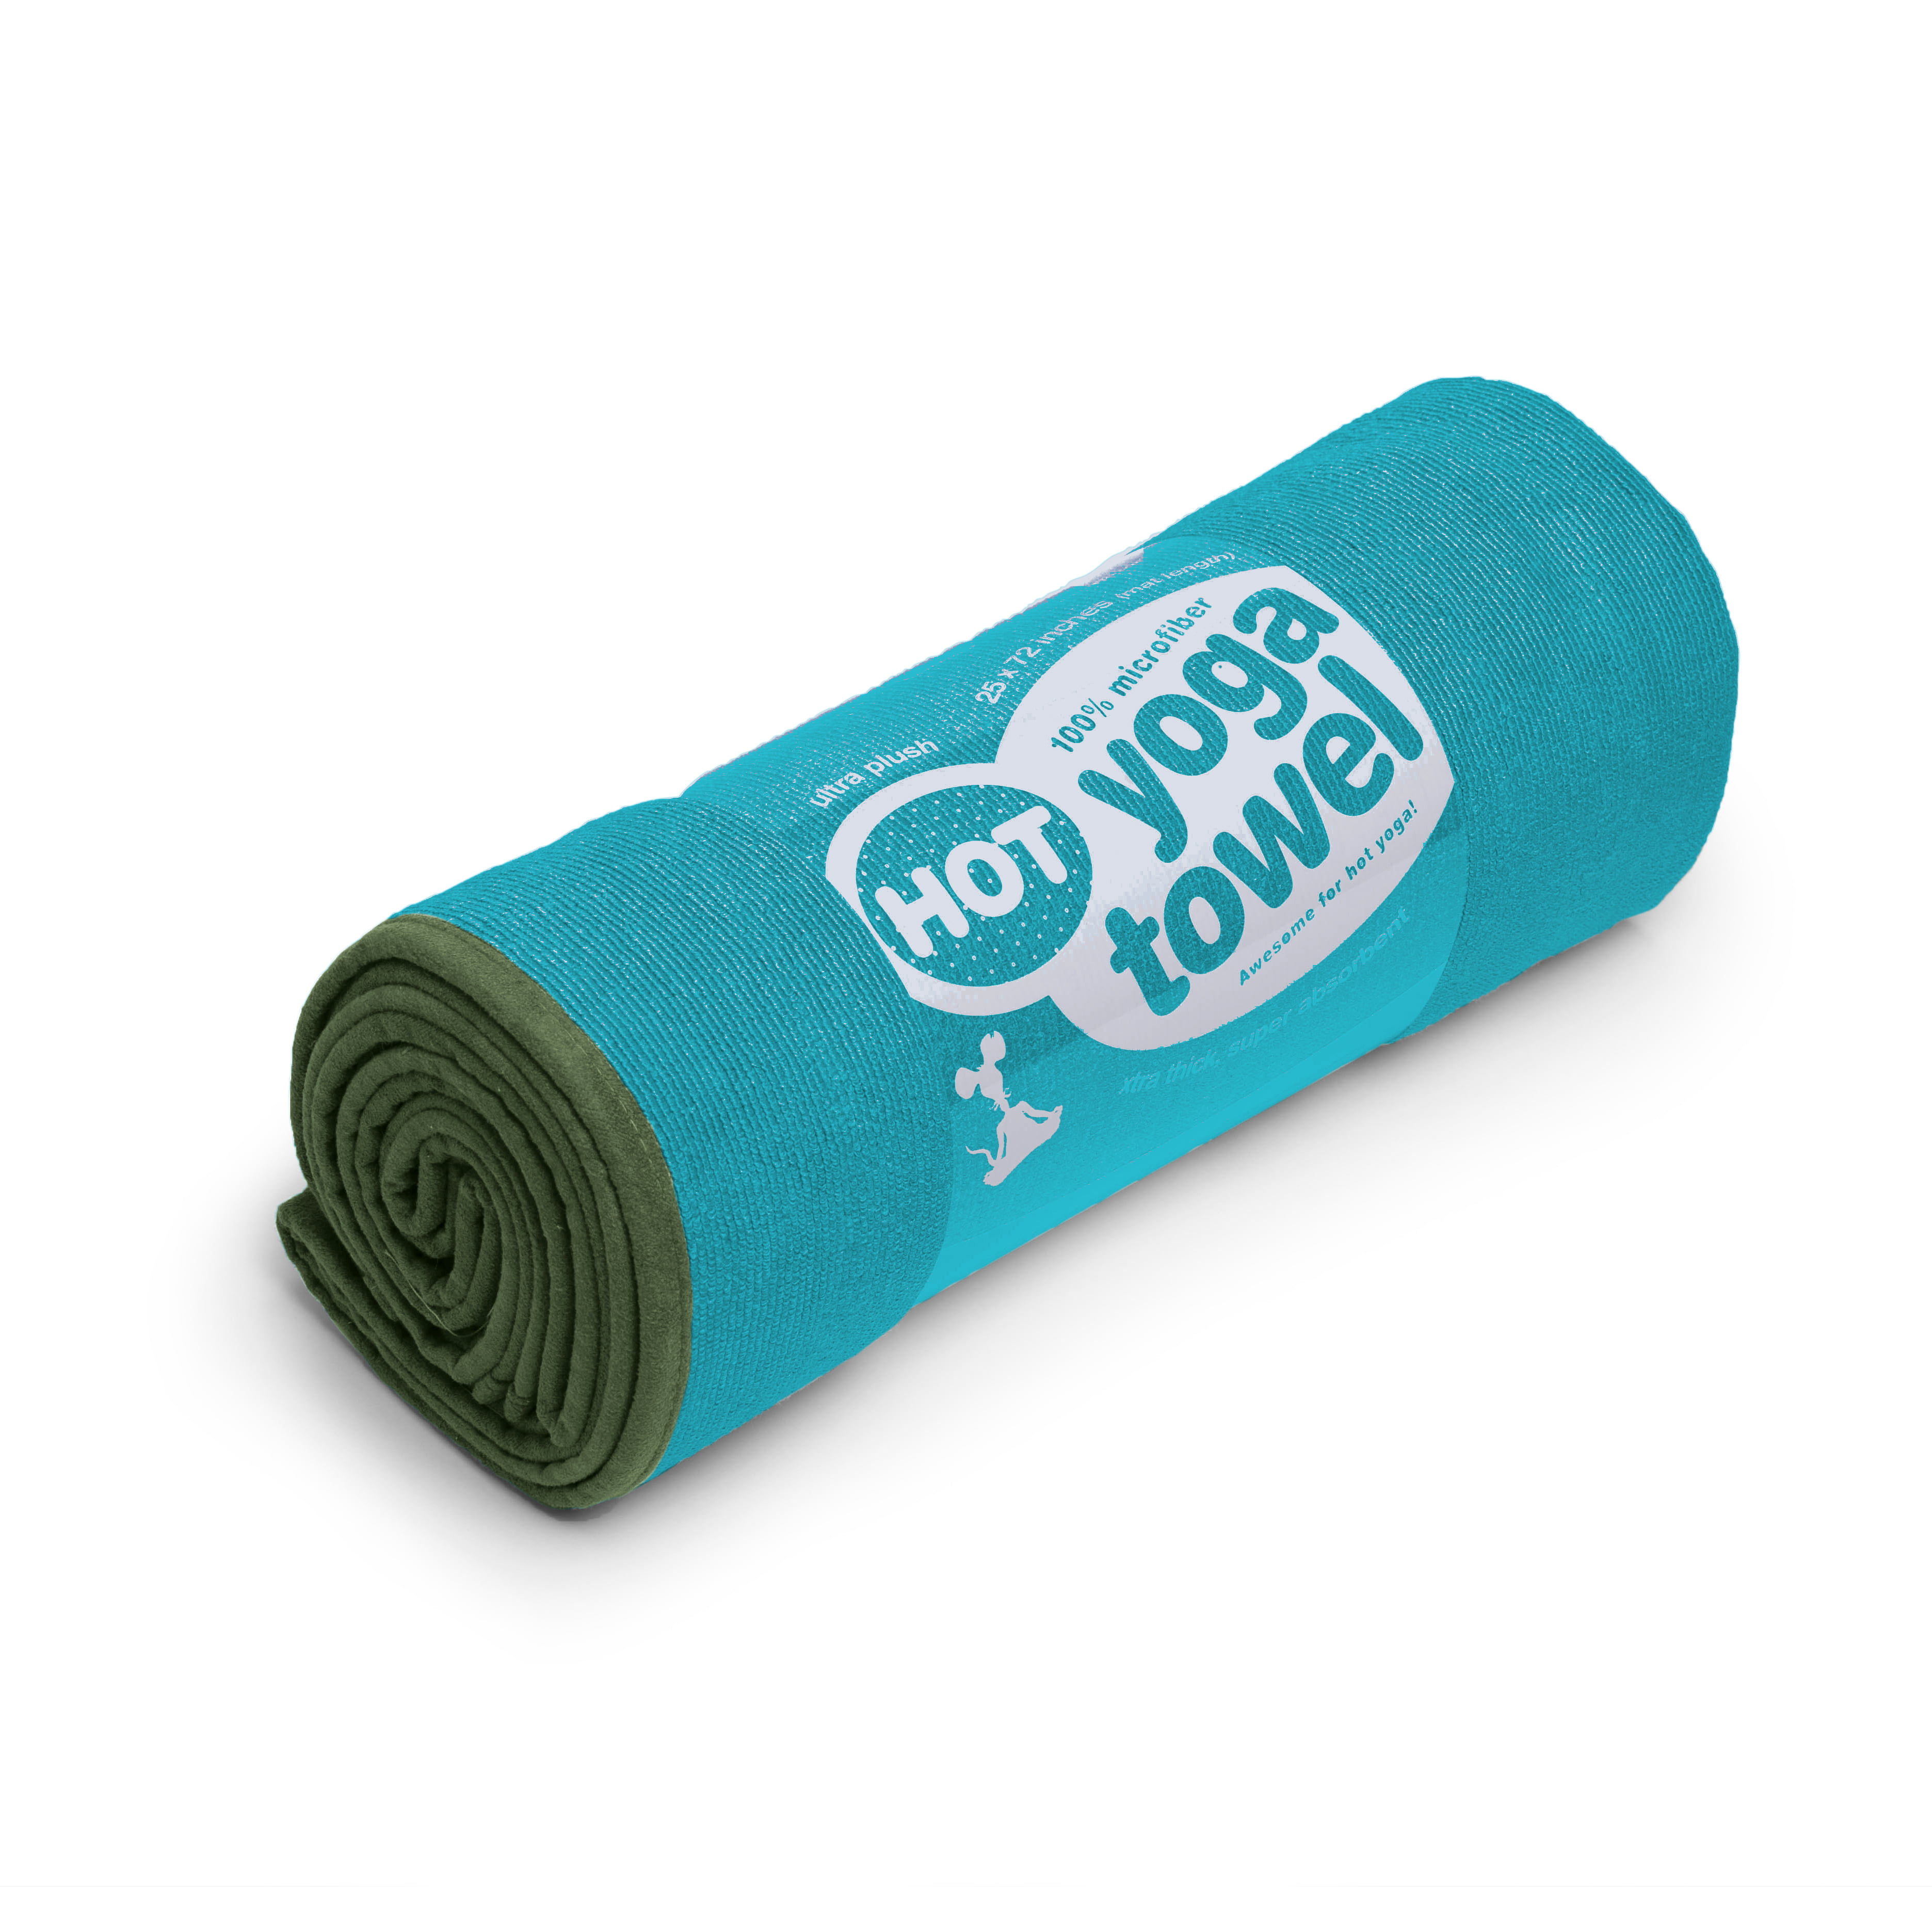 Fitness and Pilates Reehut Hot Yoga Towel 72x24 - Microfiber Bikram Towel for Workout